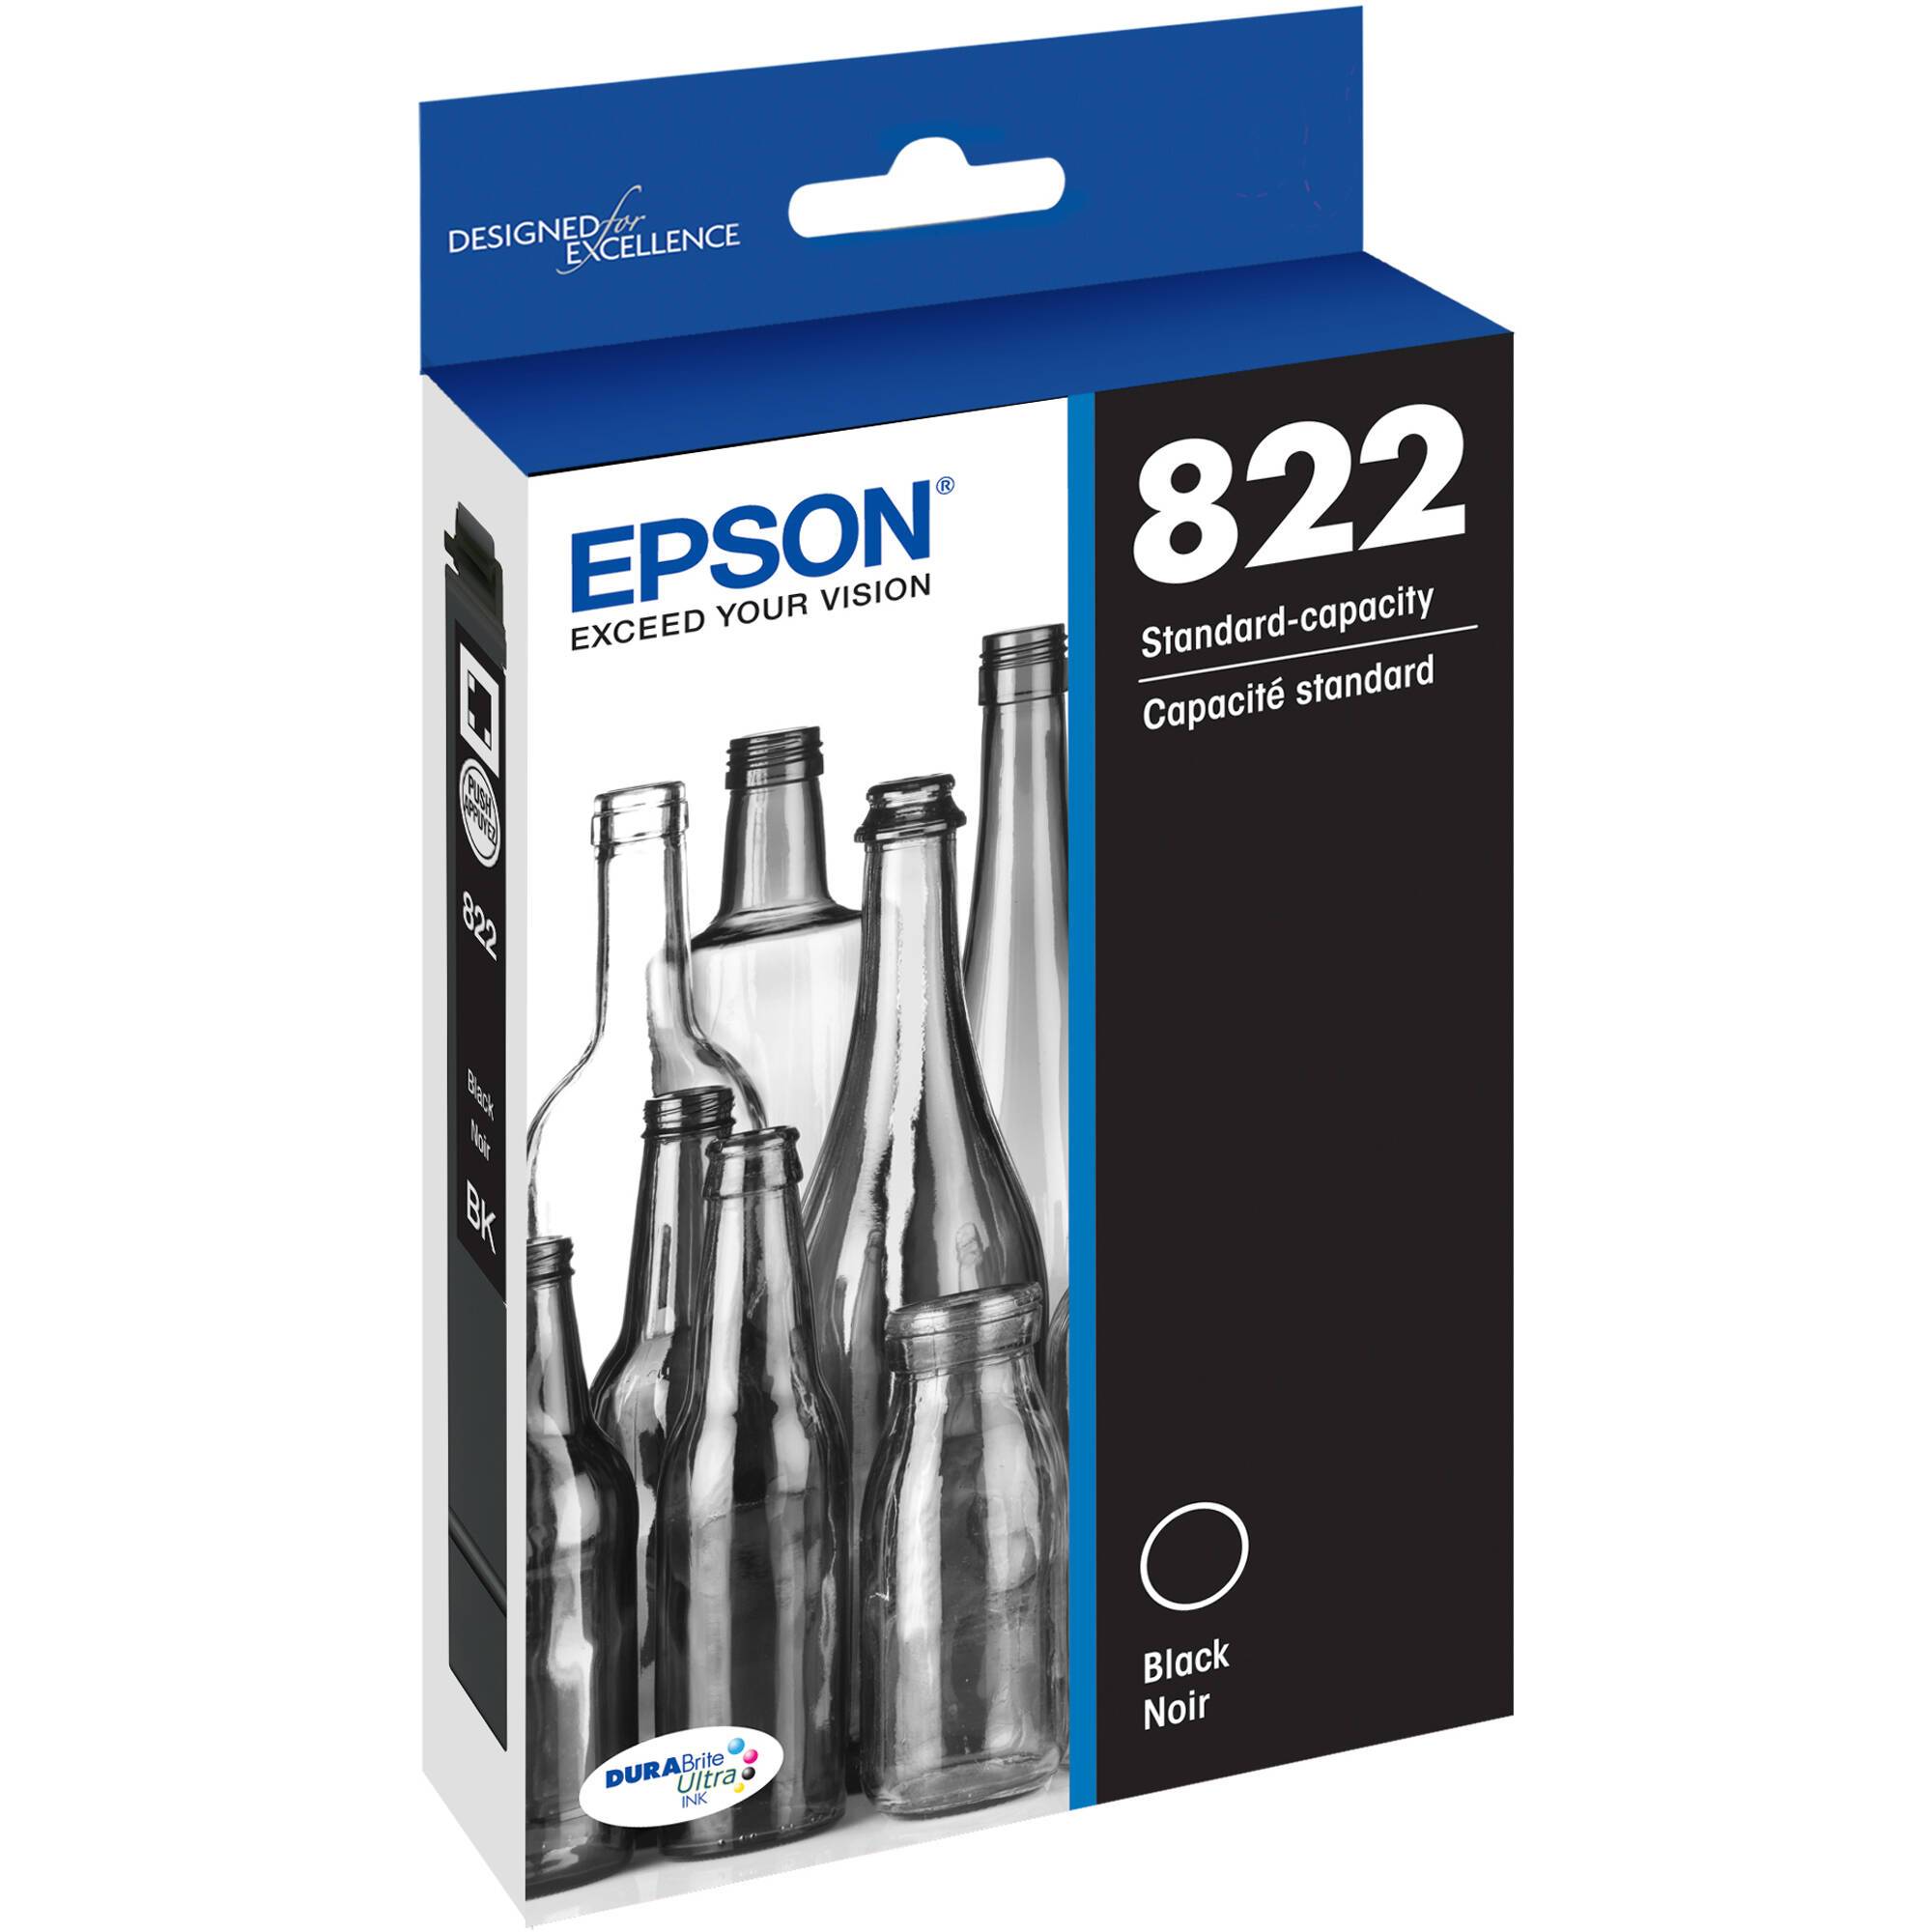 Absolute Toner T822120-S Epson EPSON T822 Standard Capacity Black Ink Cartridge Original Epson Cartridges